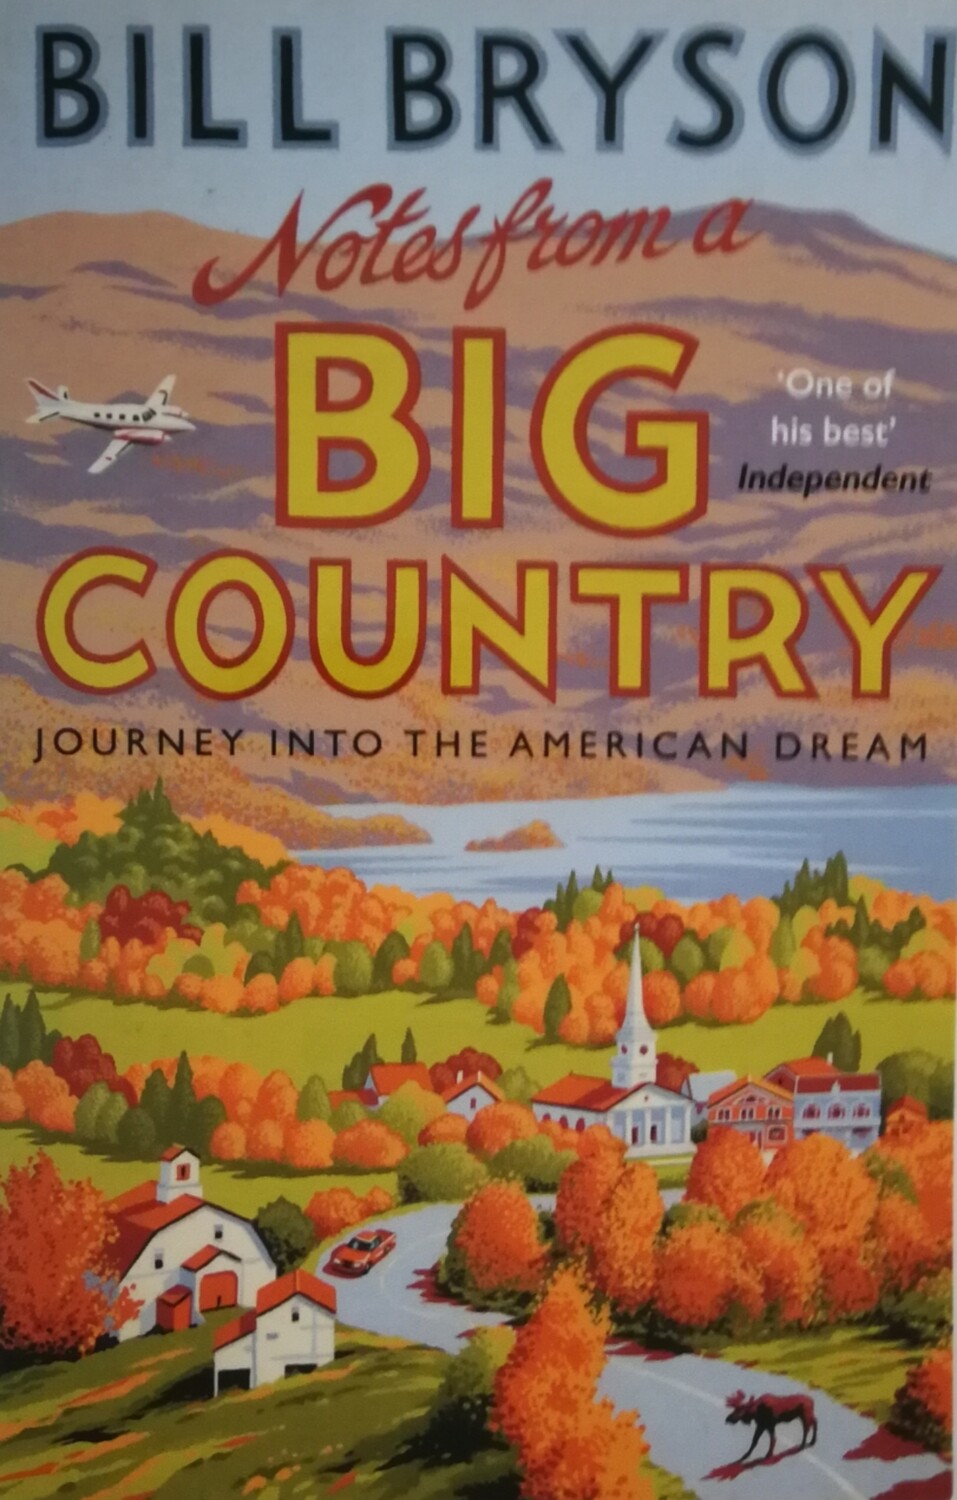 Big Country by Bill Bryson